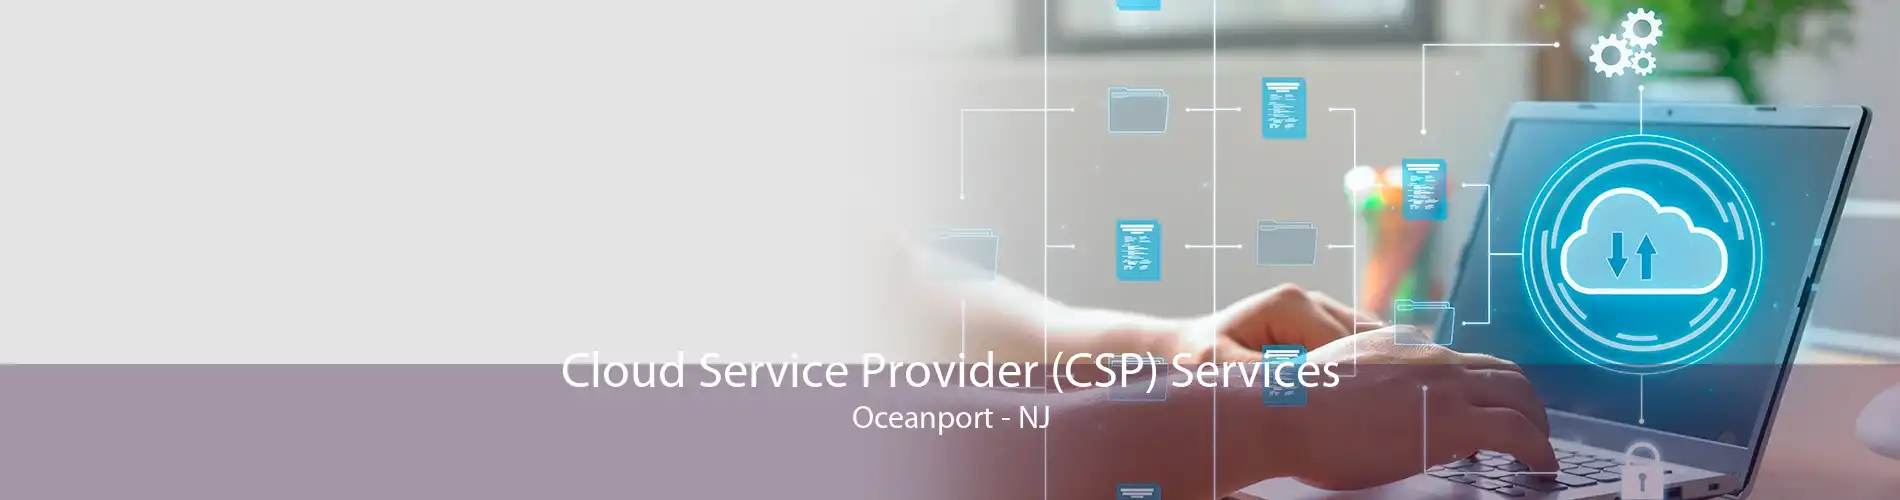 Cloud Service Provider (CSP) Services Oceanport - NJ